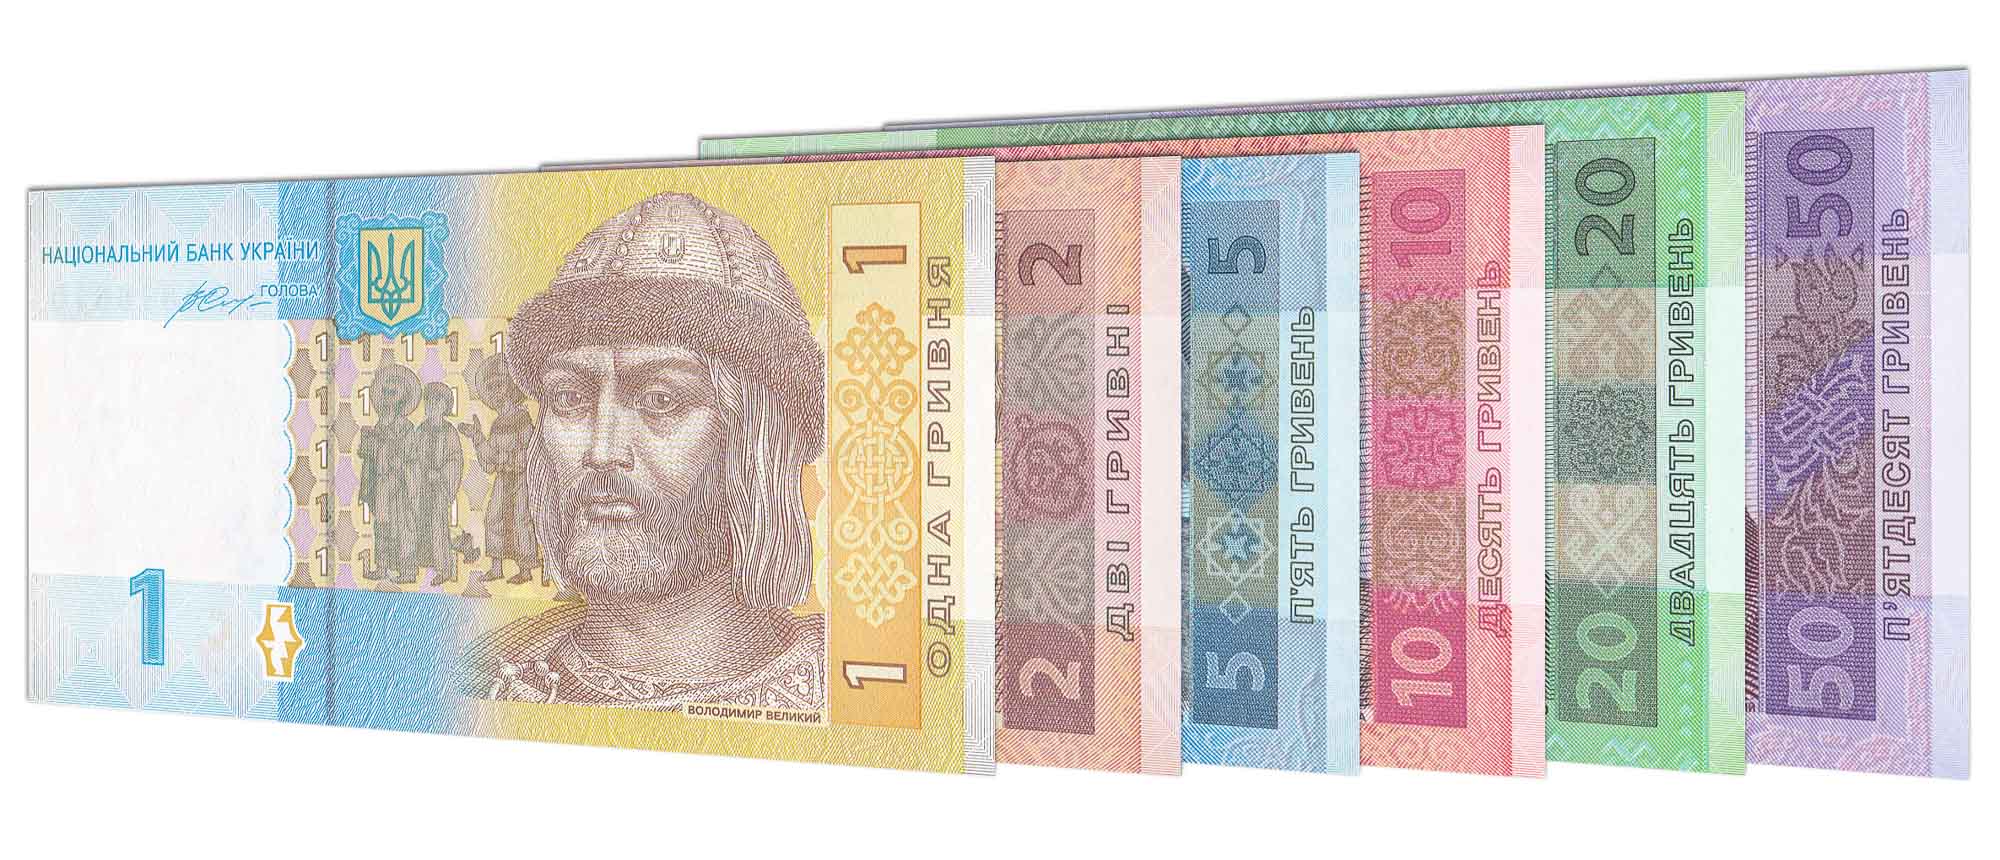 Crypton ltd ukraine currency 30 bitcoins for sale